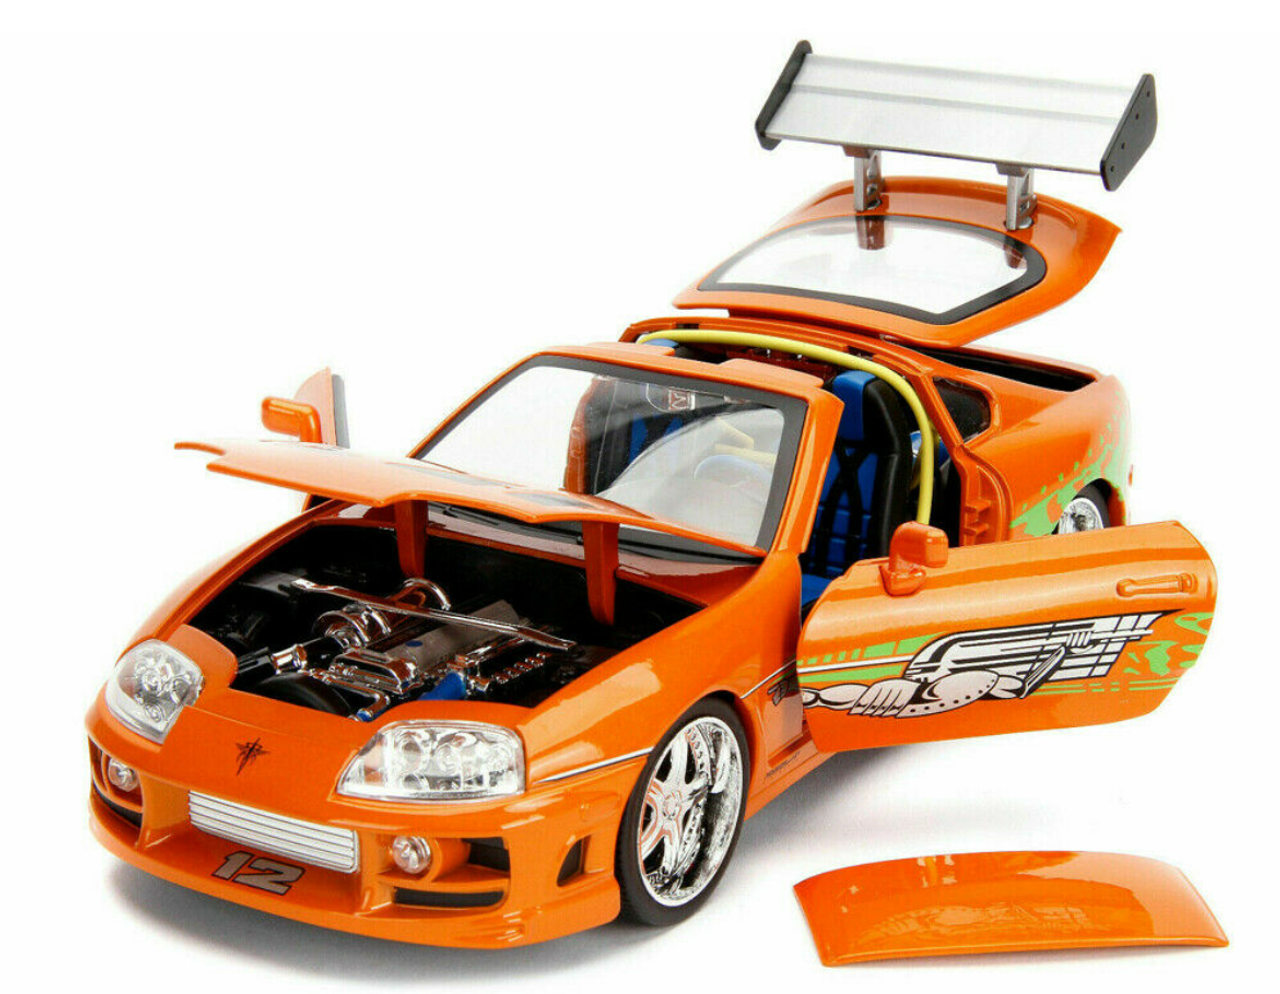 1/18 Jada 1995 Toyota Supra (Orange Metallic) with Lights and Brian Figurine "Fast & Furious" Movie Diecast Model